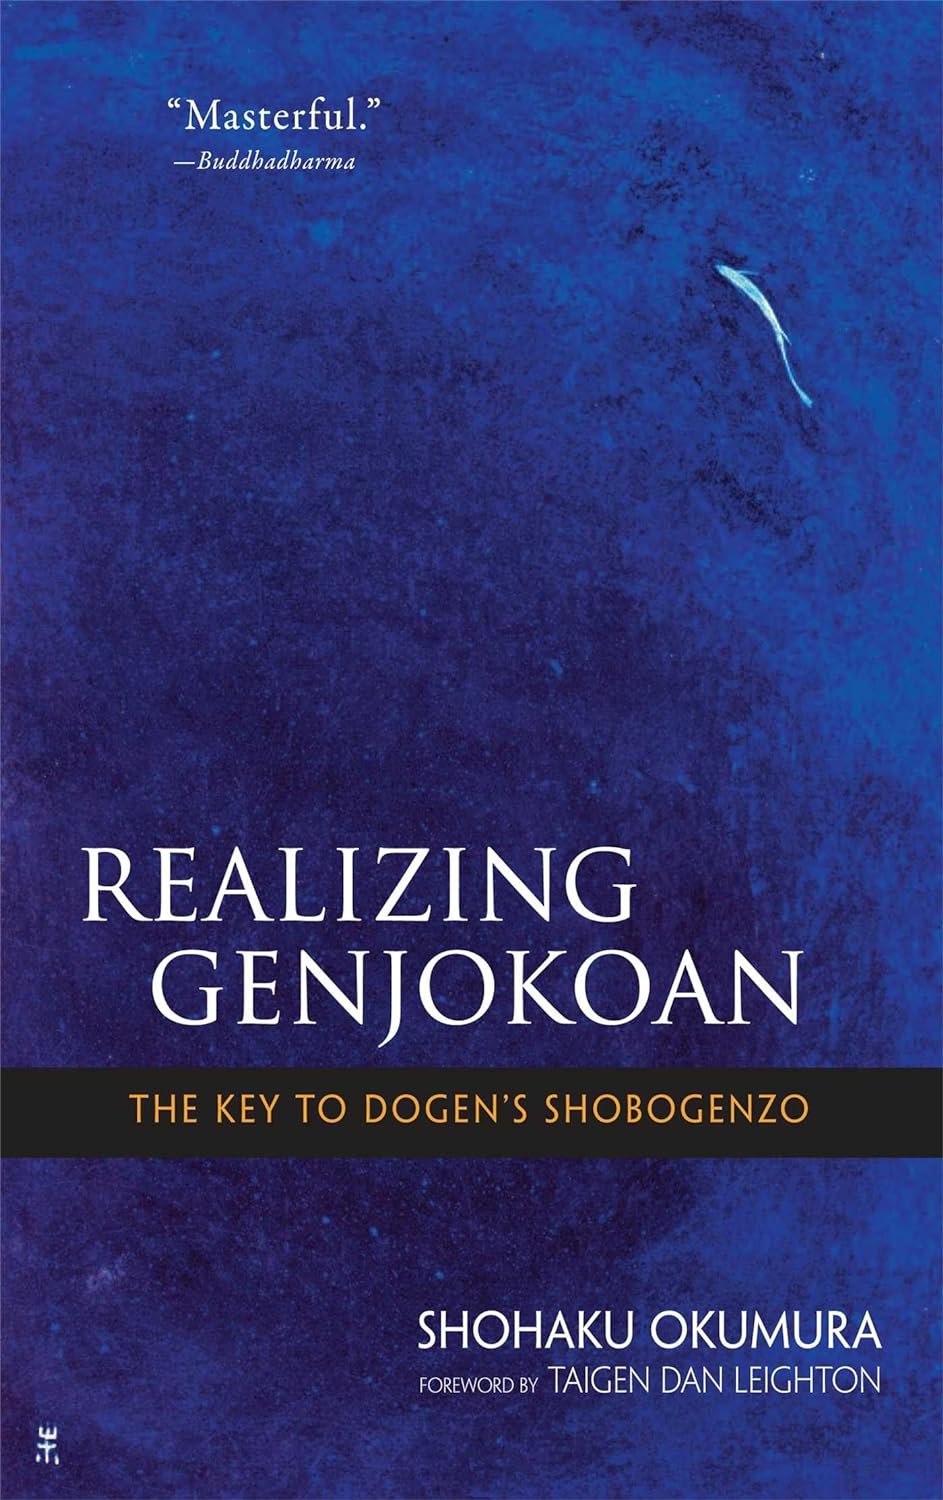 Shohaku Okumura: Realizing Genjokoan (2010, Wisdom Publications)